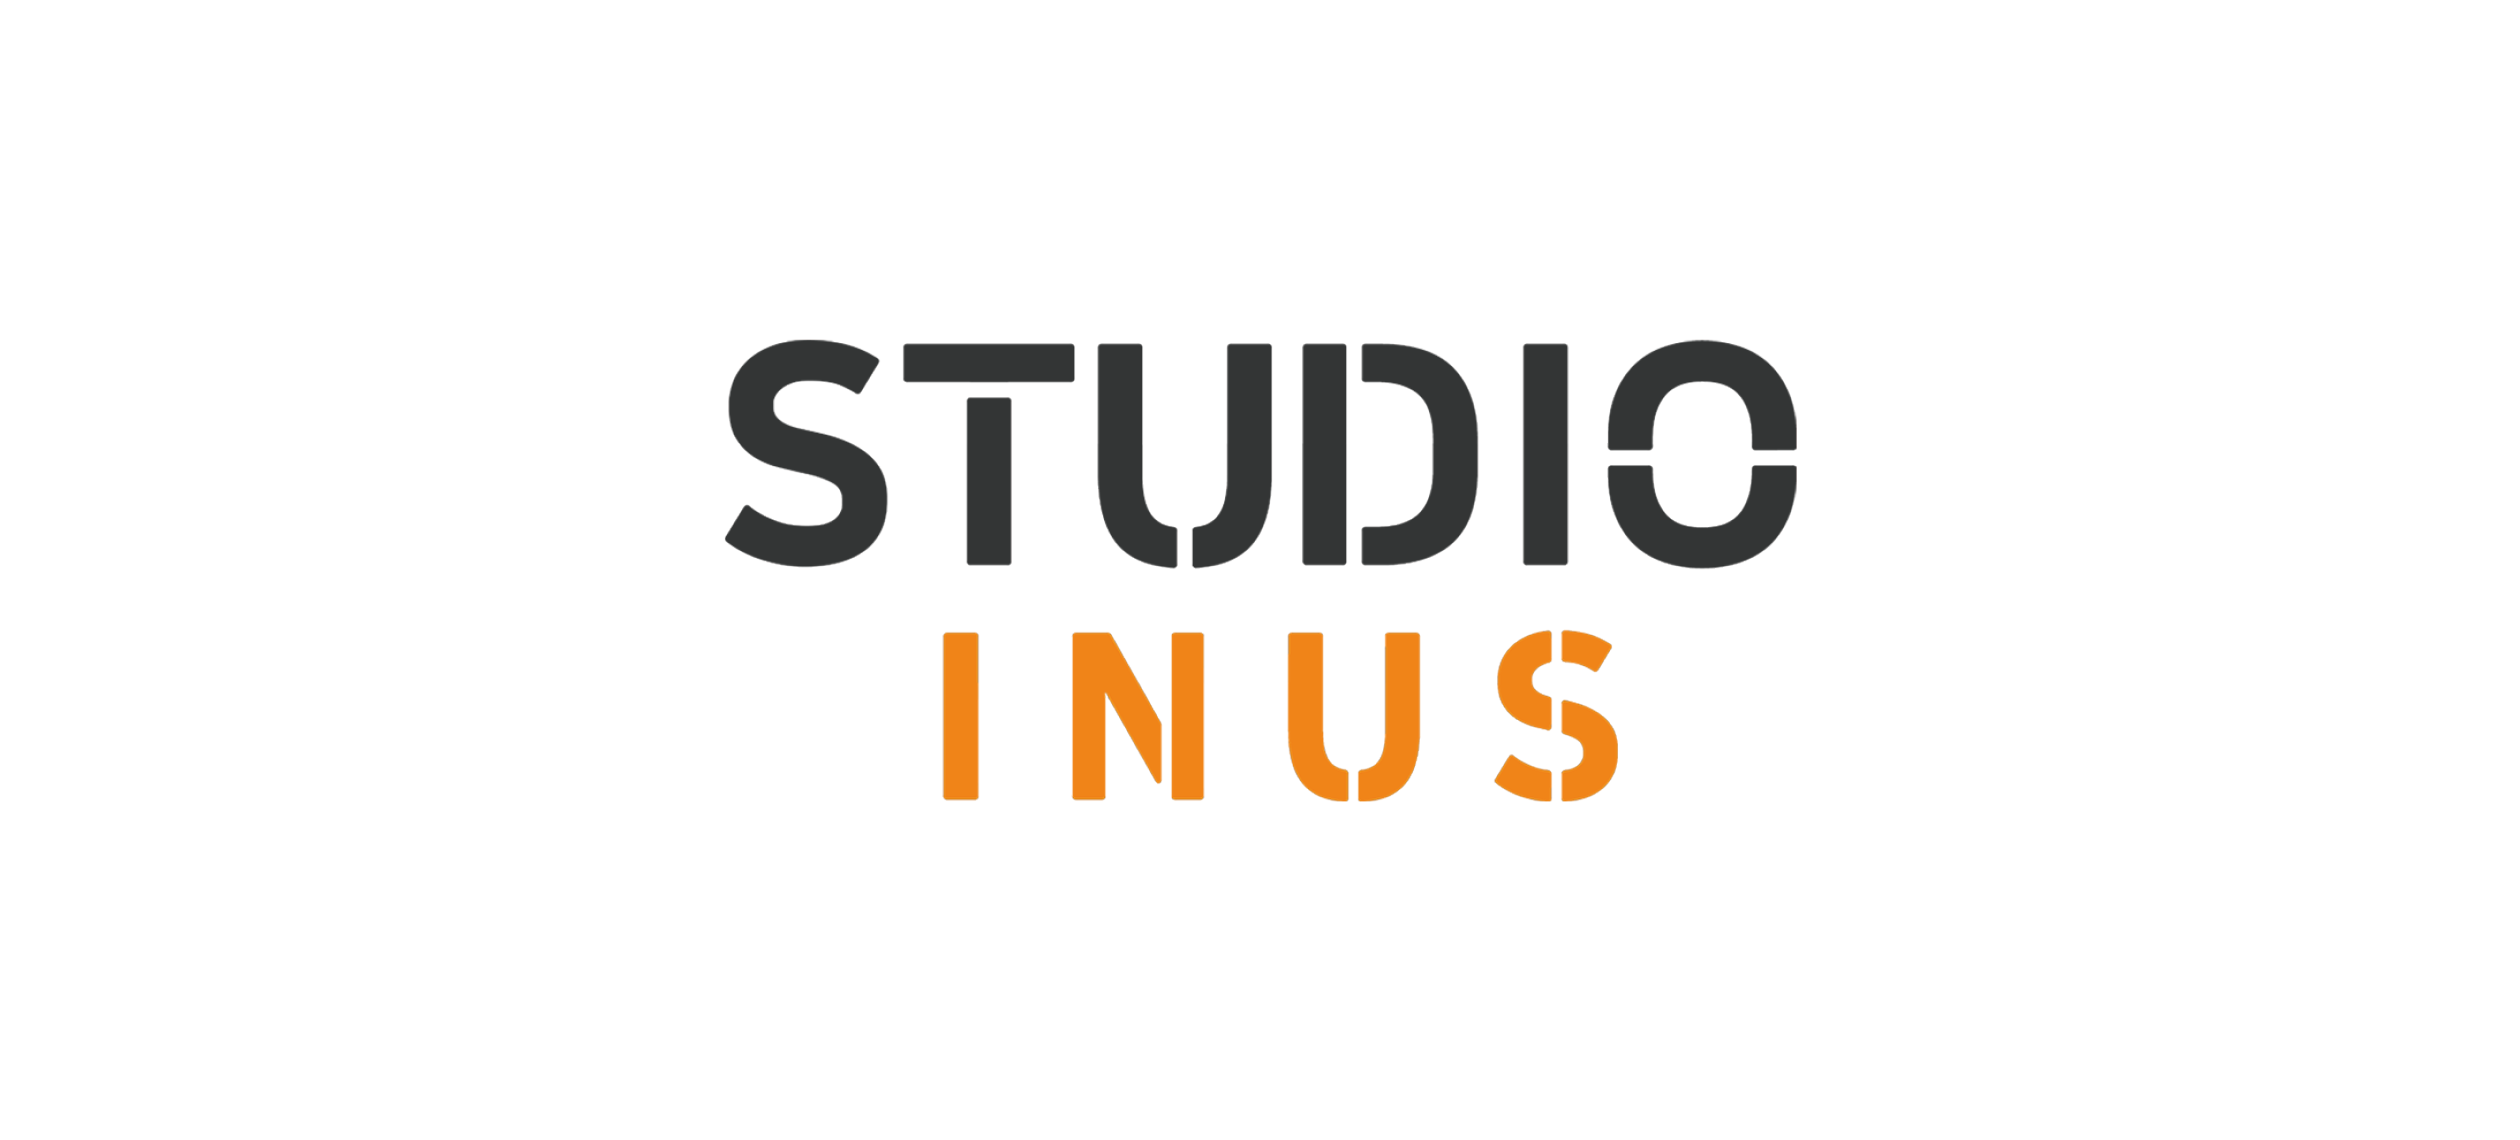 Subsidiary_Studio INUS